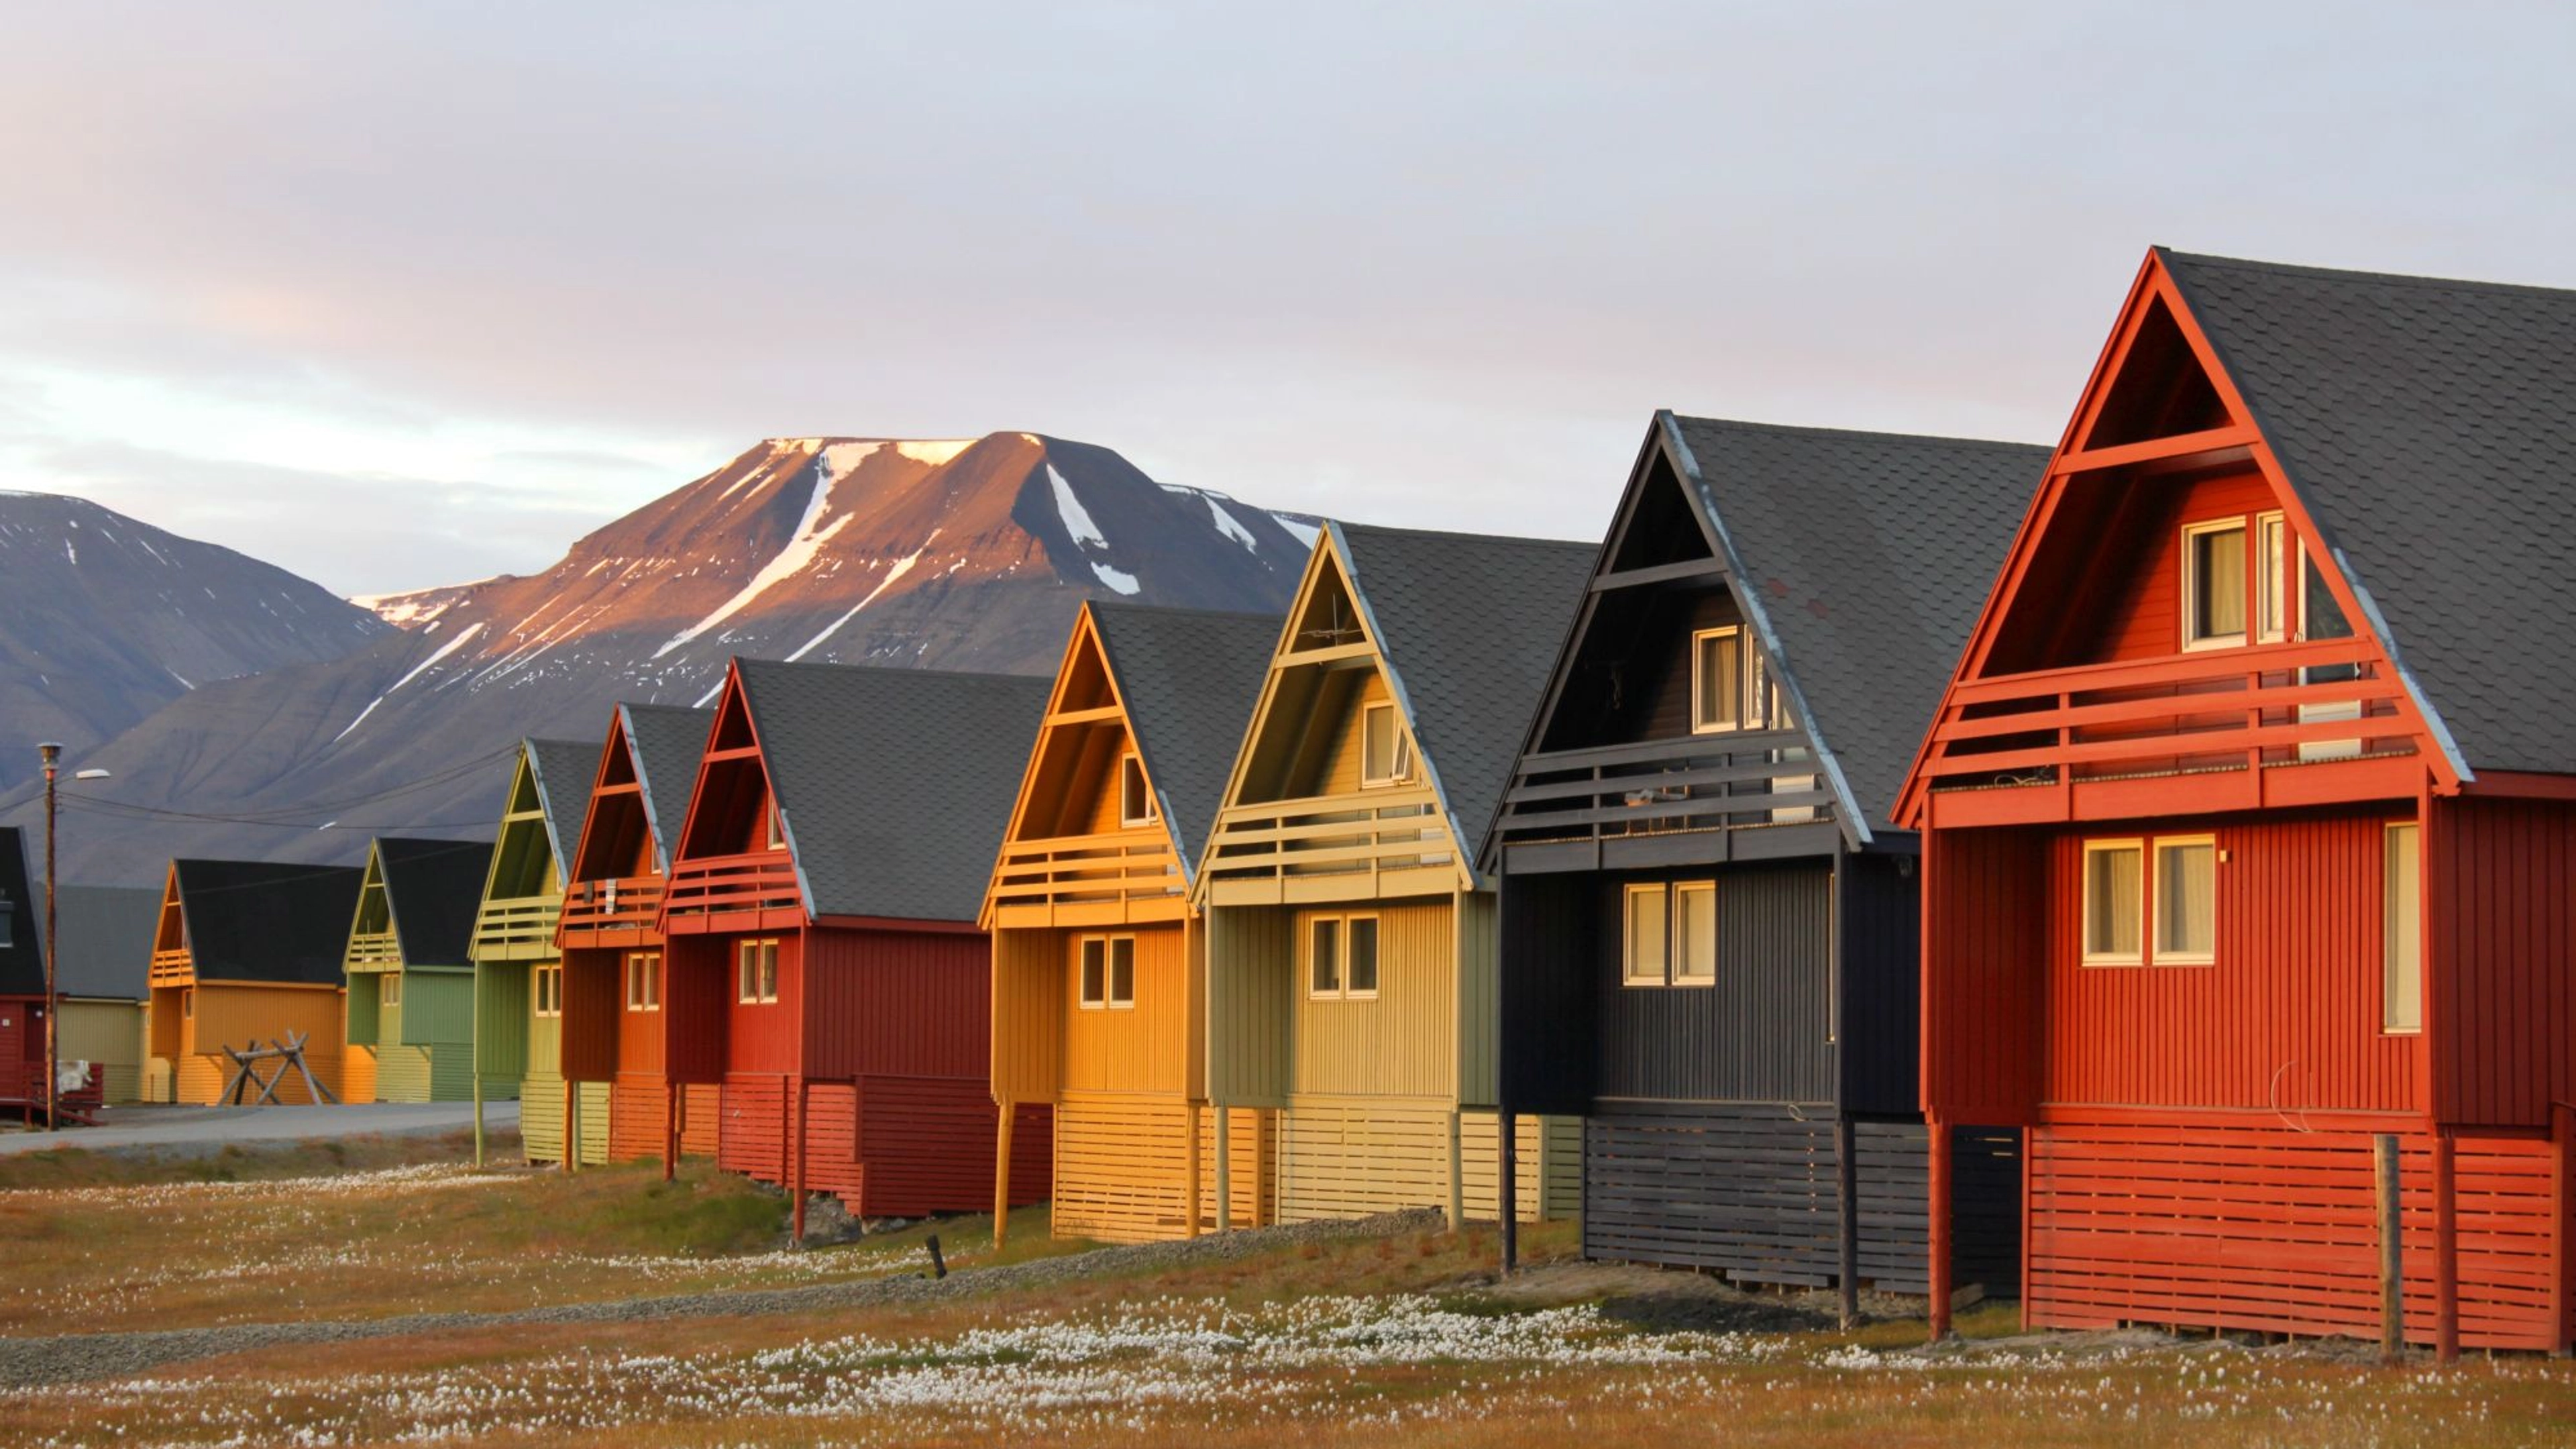 Houses in Longyearbyen, Svalbard - Norway